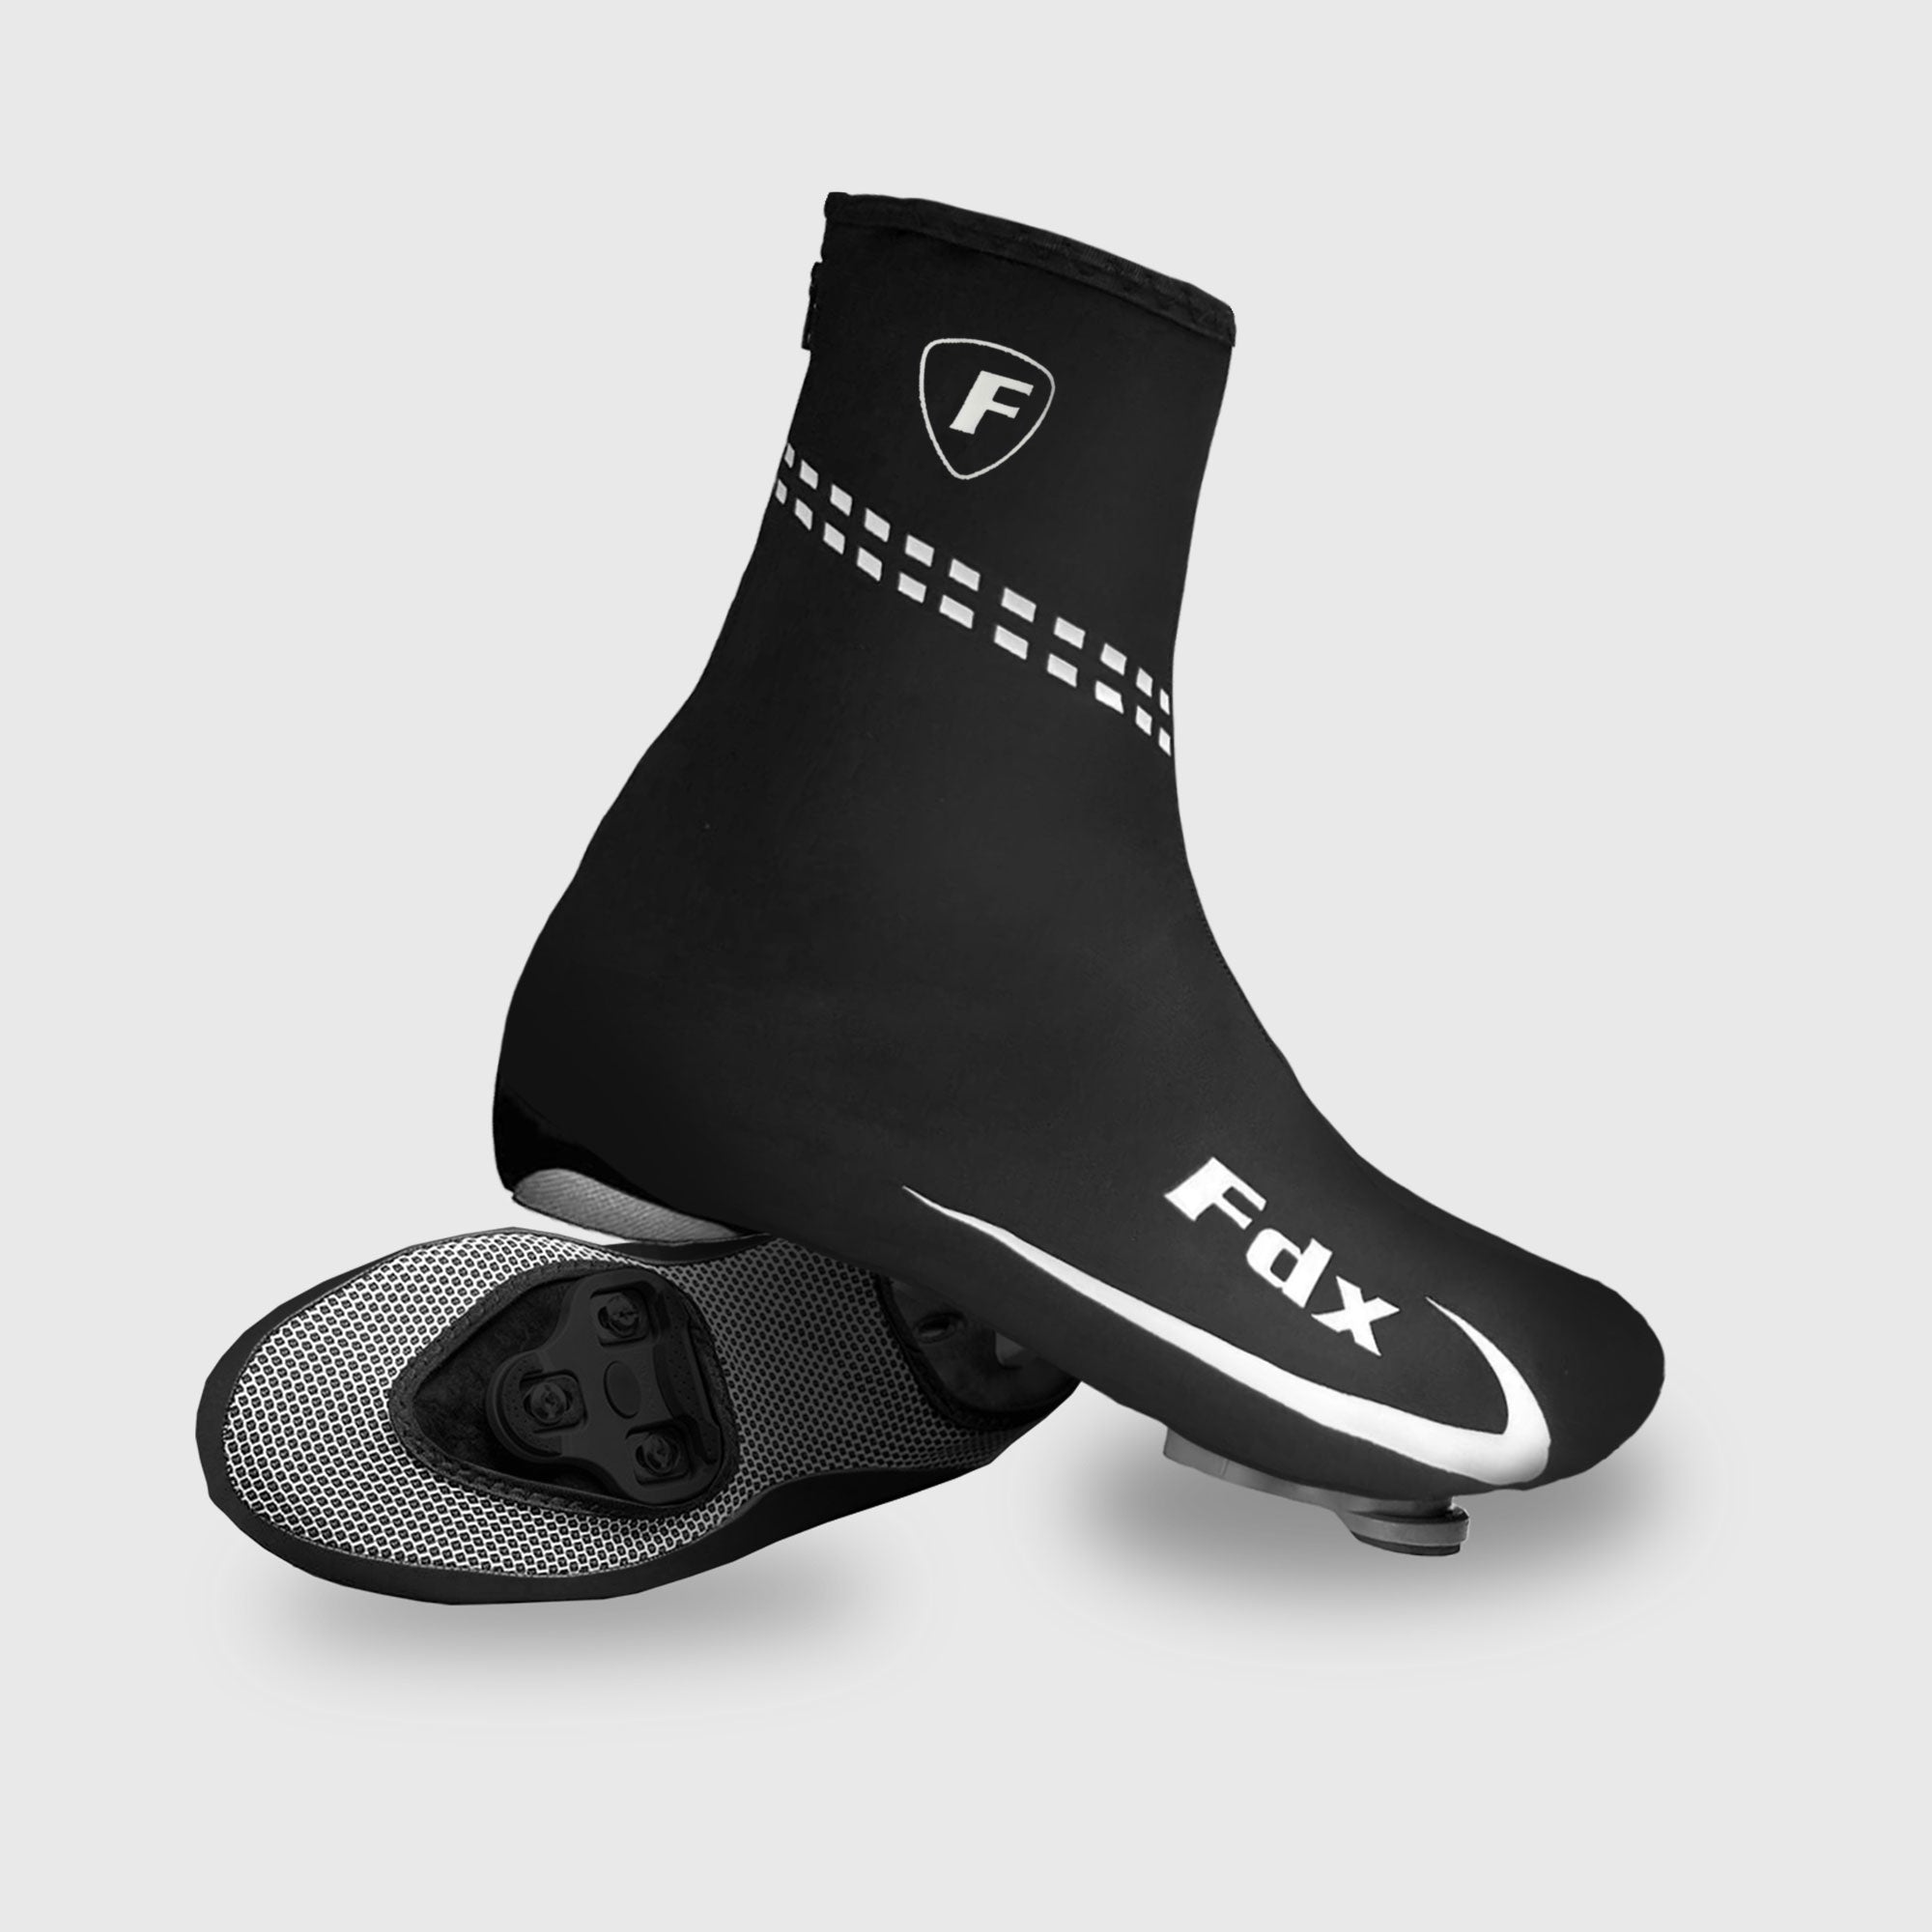 Fdx SC3 Black Cycling Shoe Covers